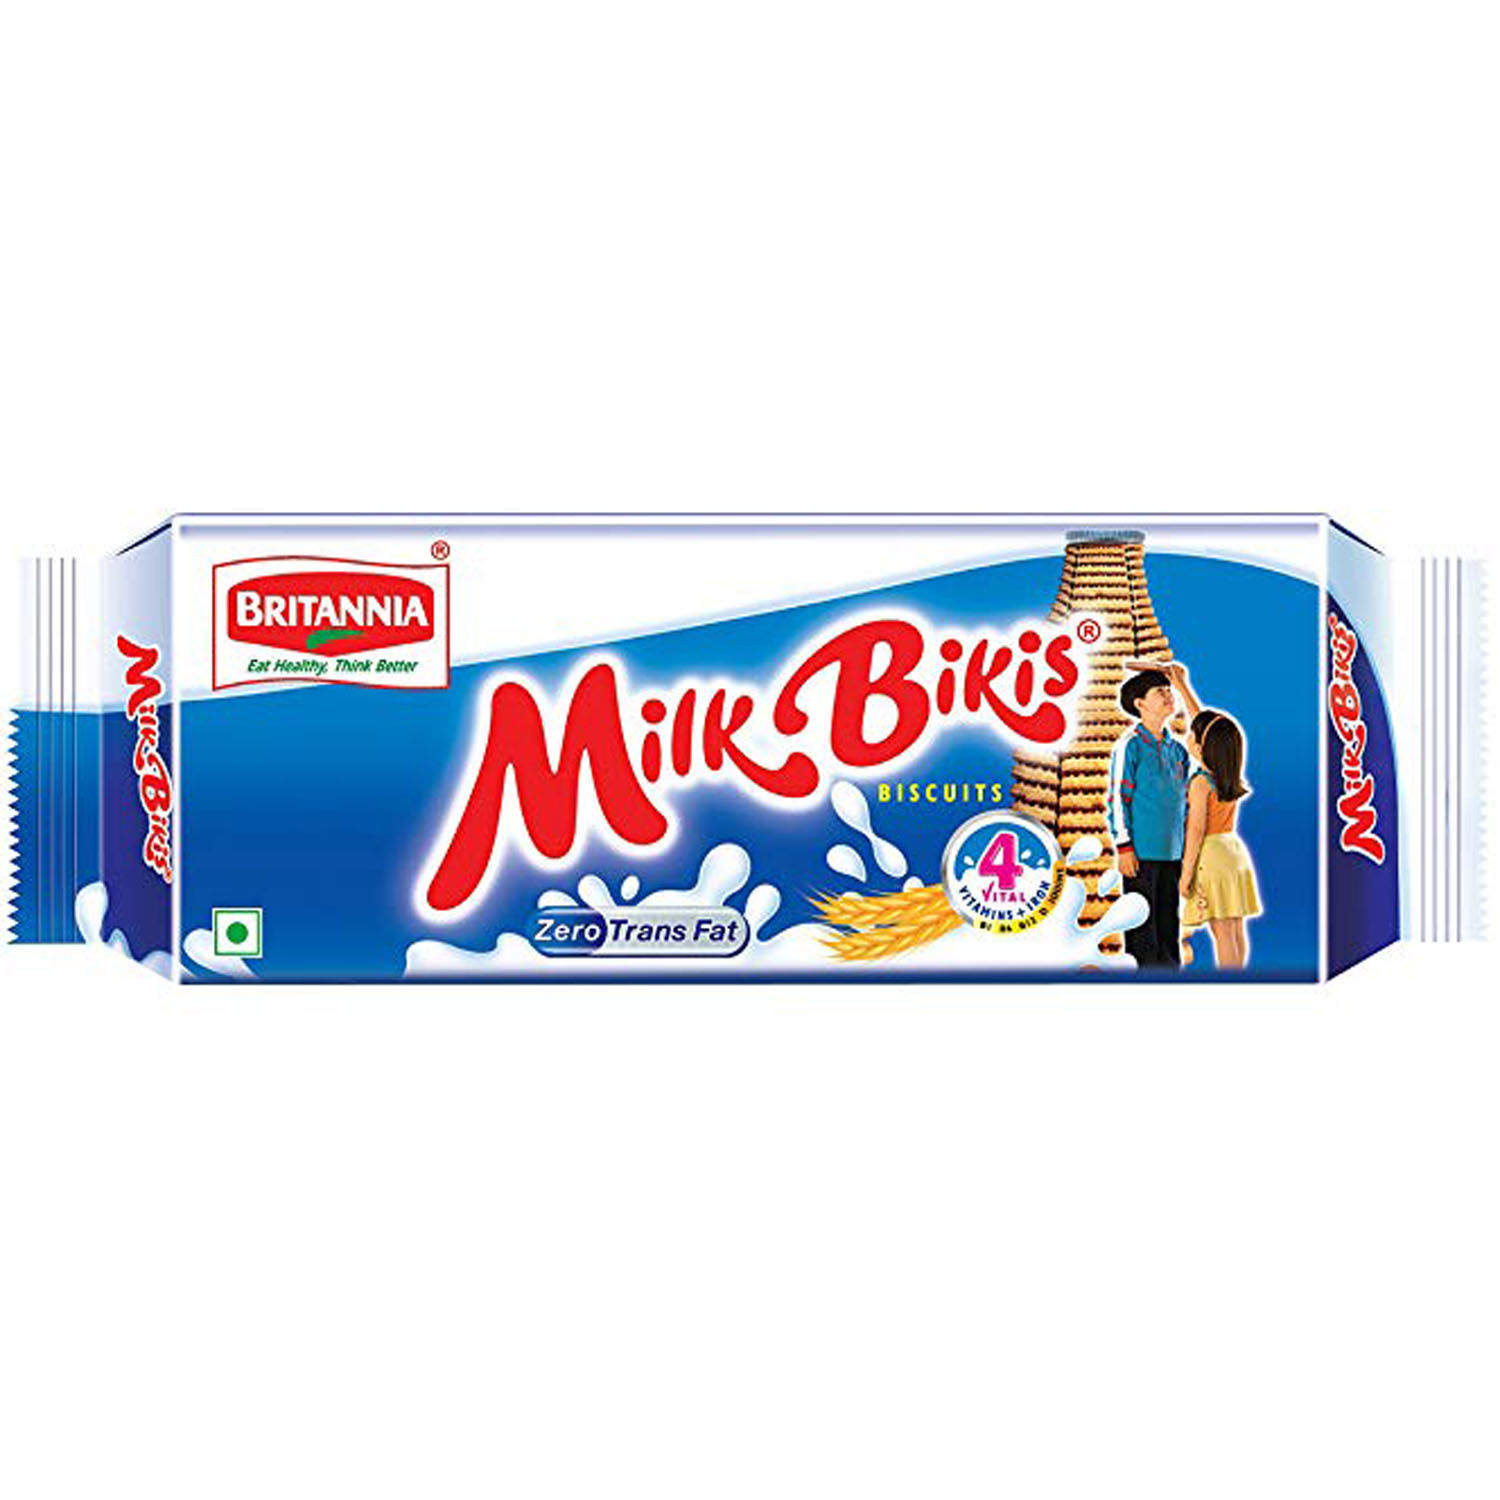 Britannia Milk Bikis Biscuits, 150 gm, Pack of 1 